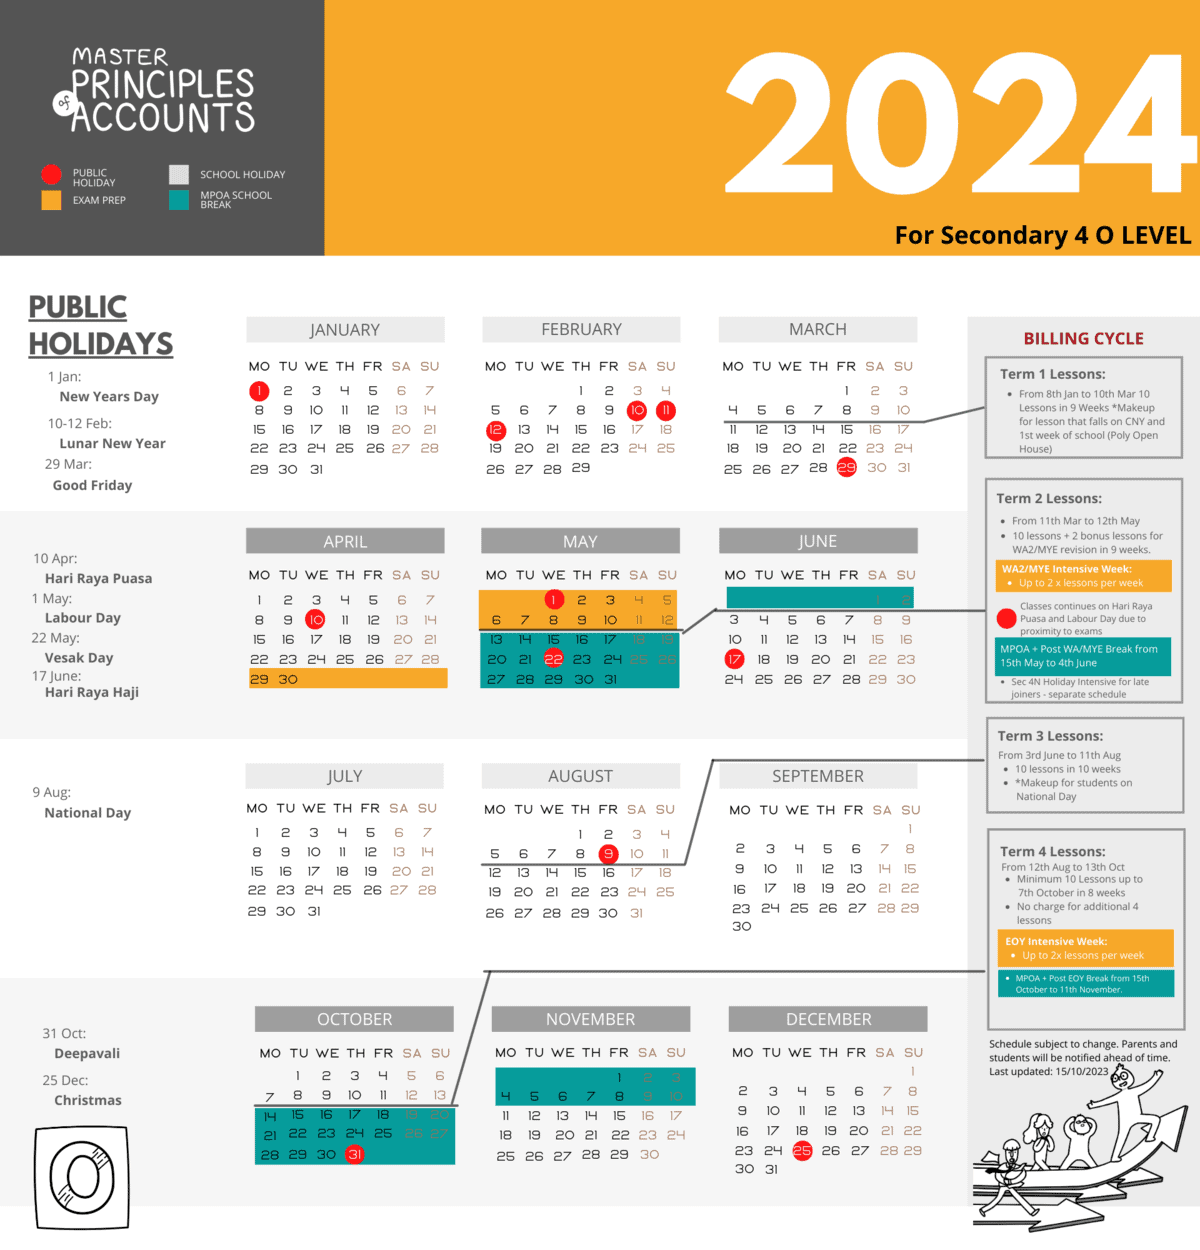 MPOA 2024 Calendar Sec 4O